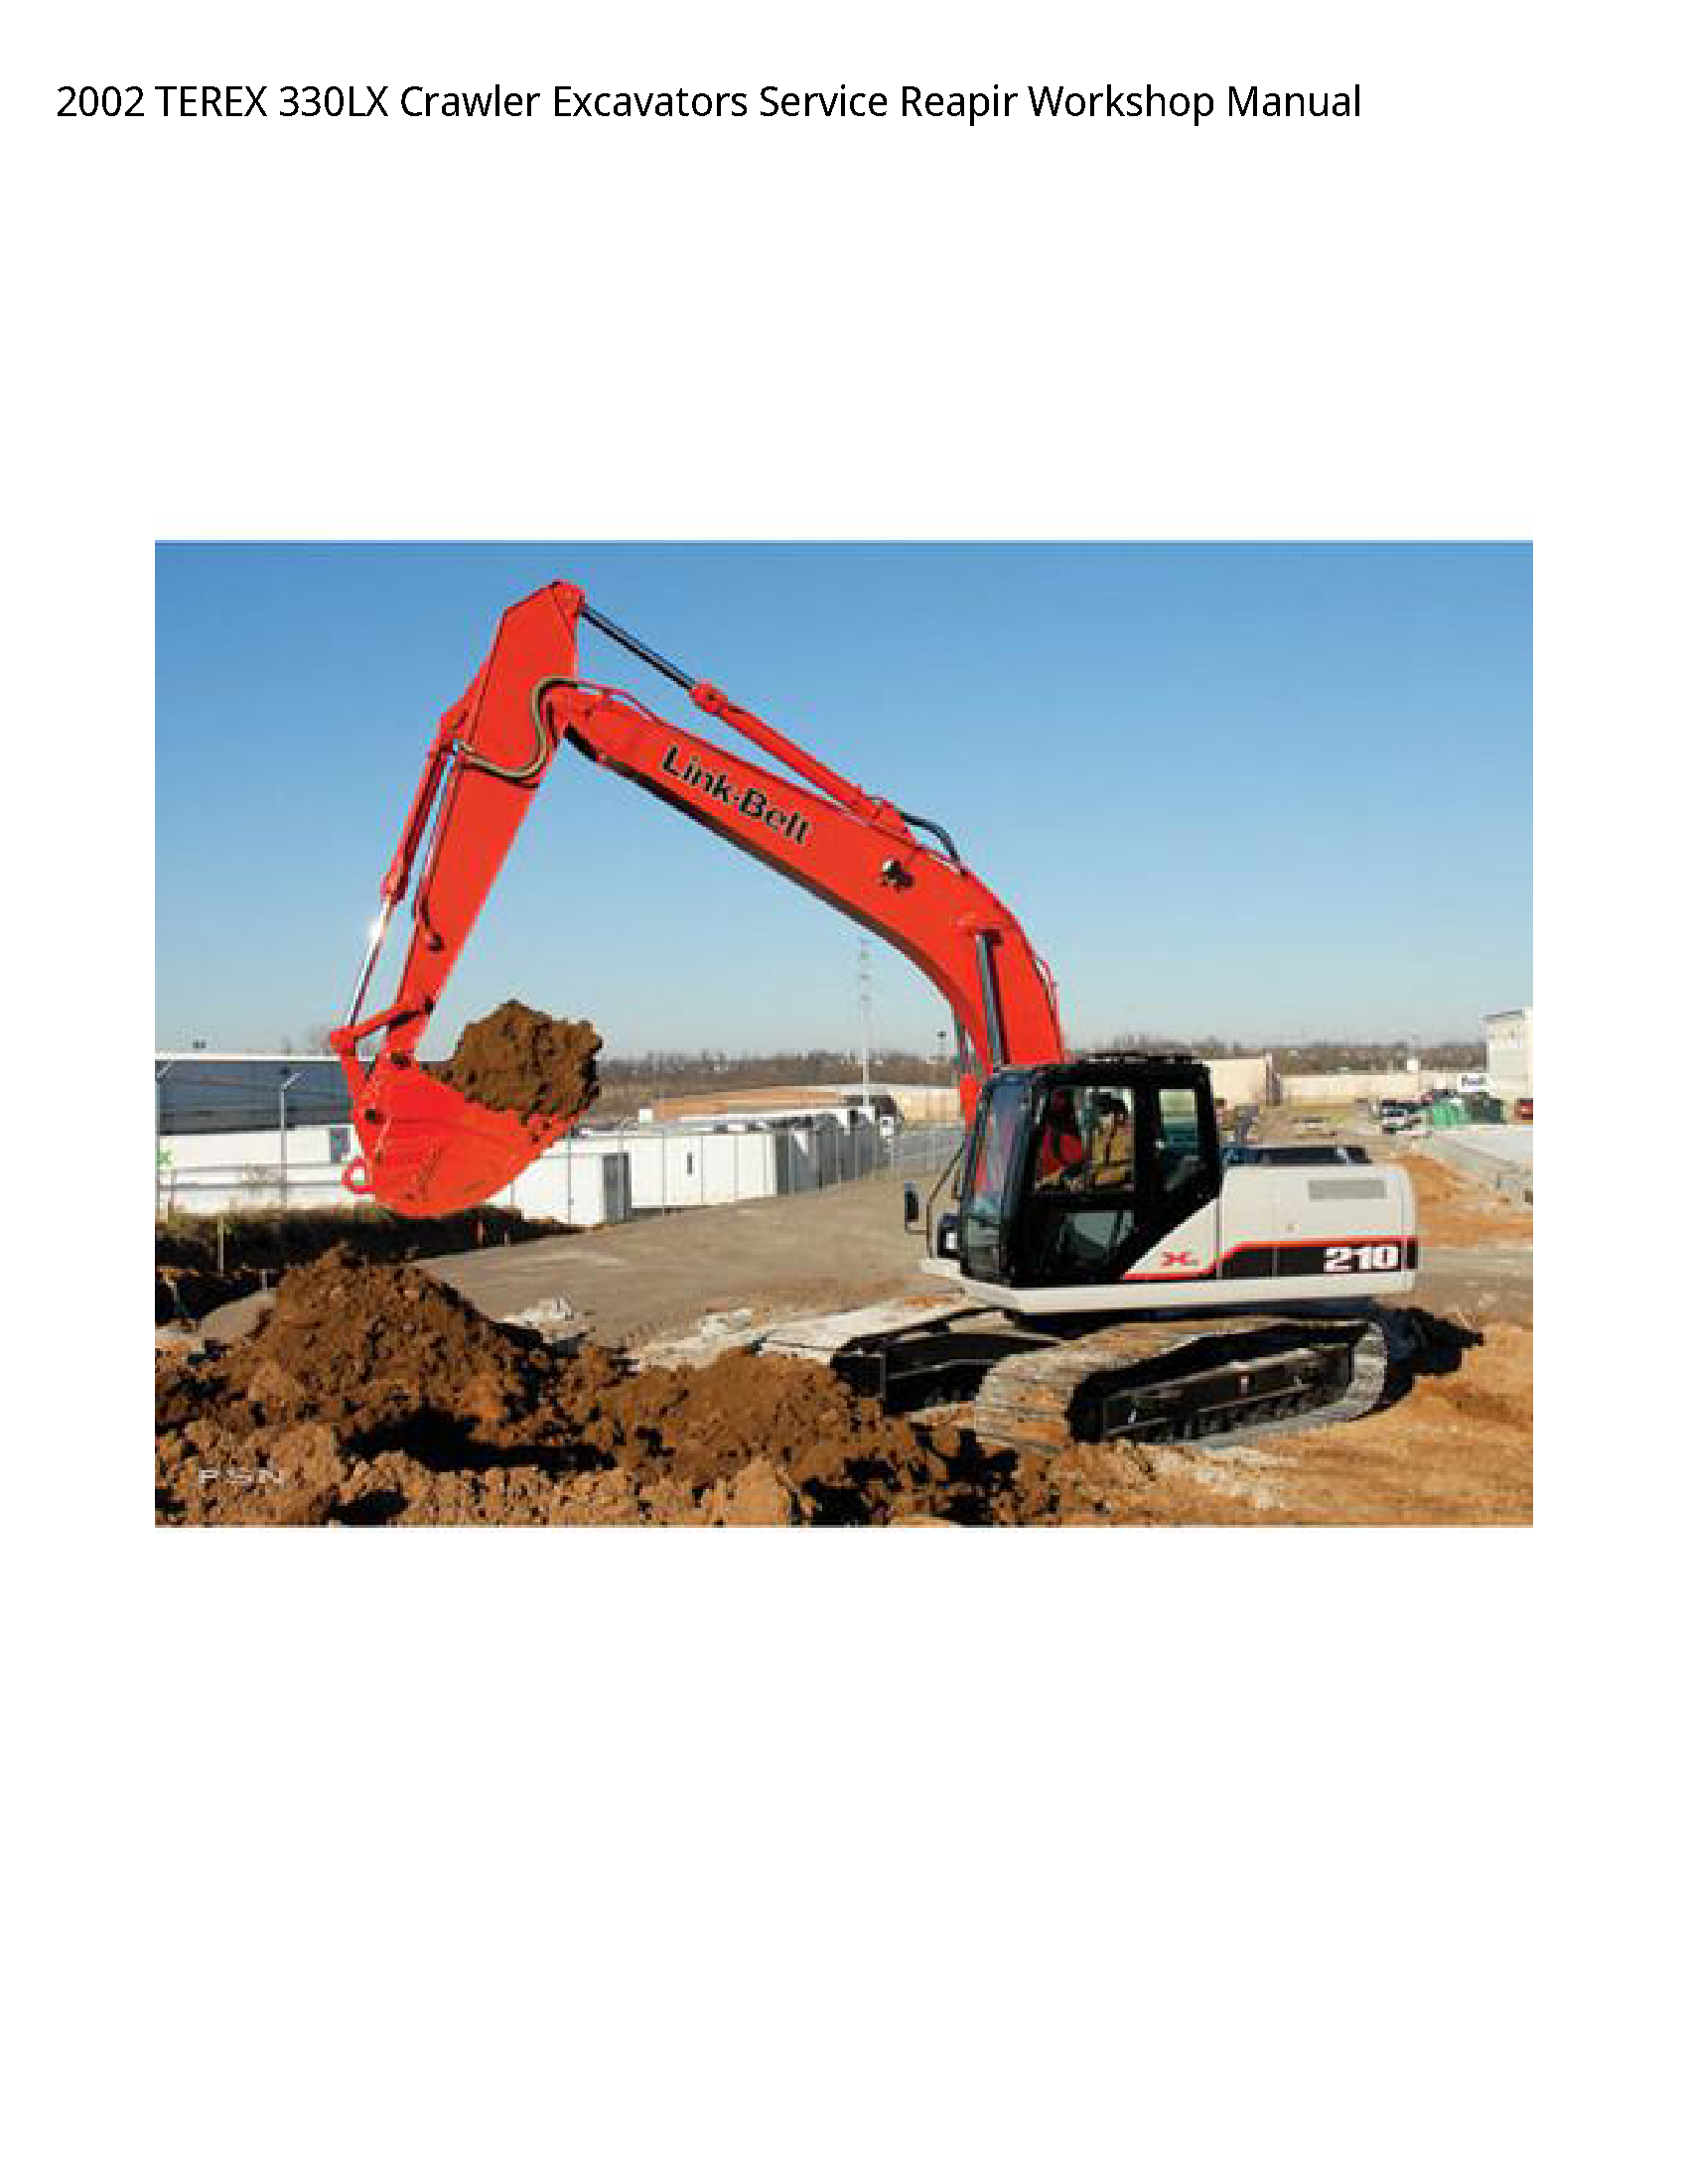 Terex 330LX Crawler Excavators Service Reapir manual